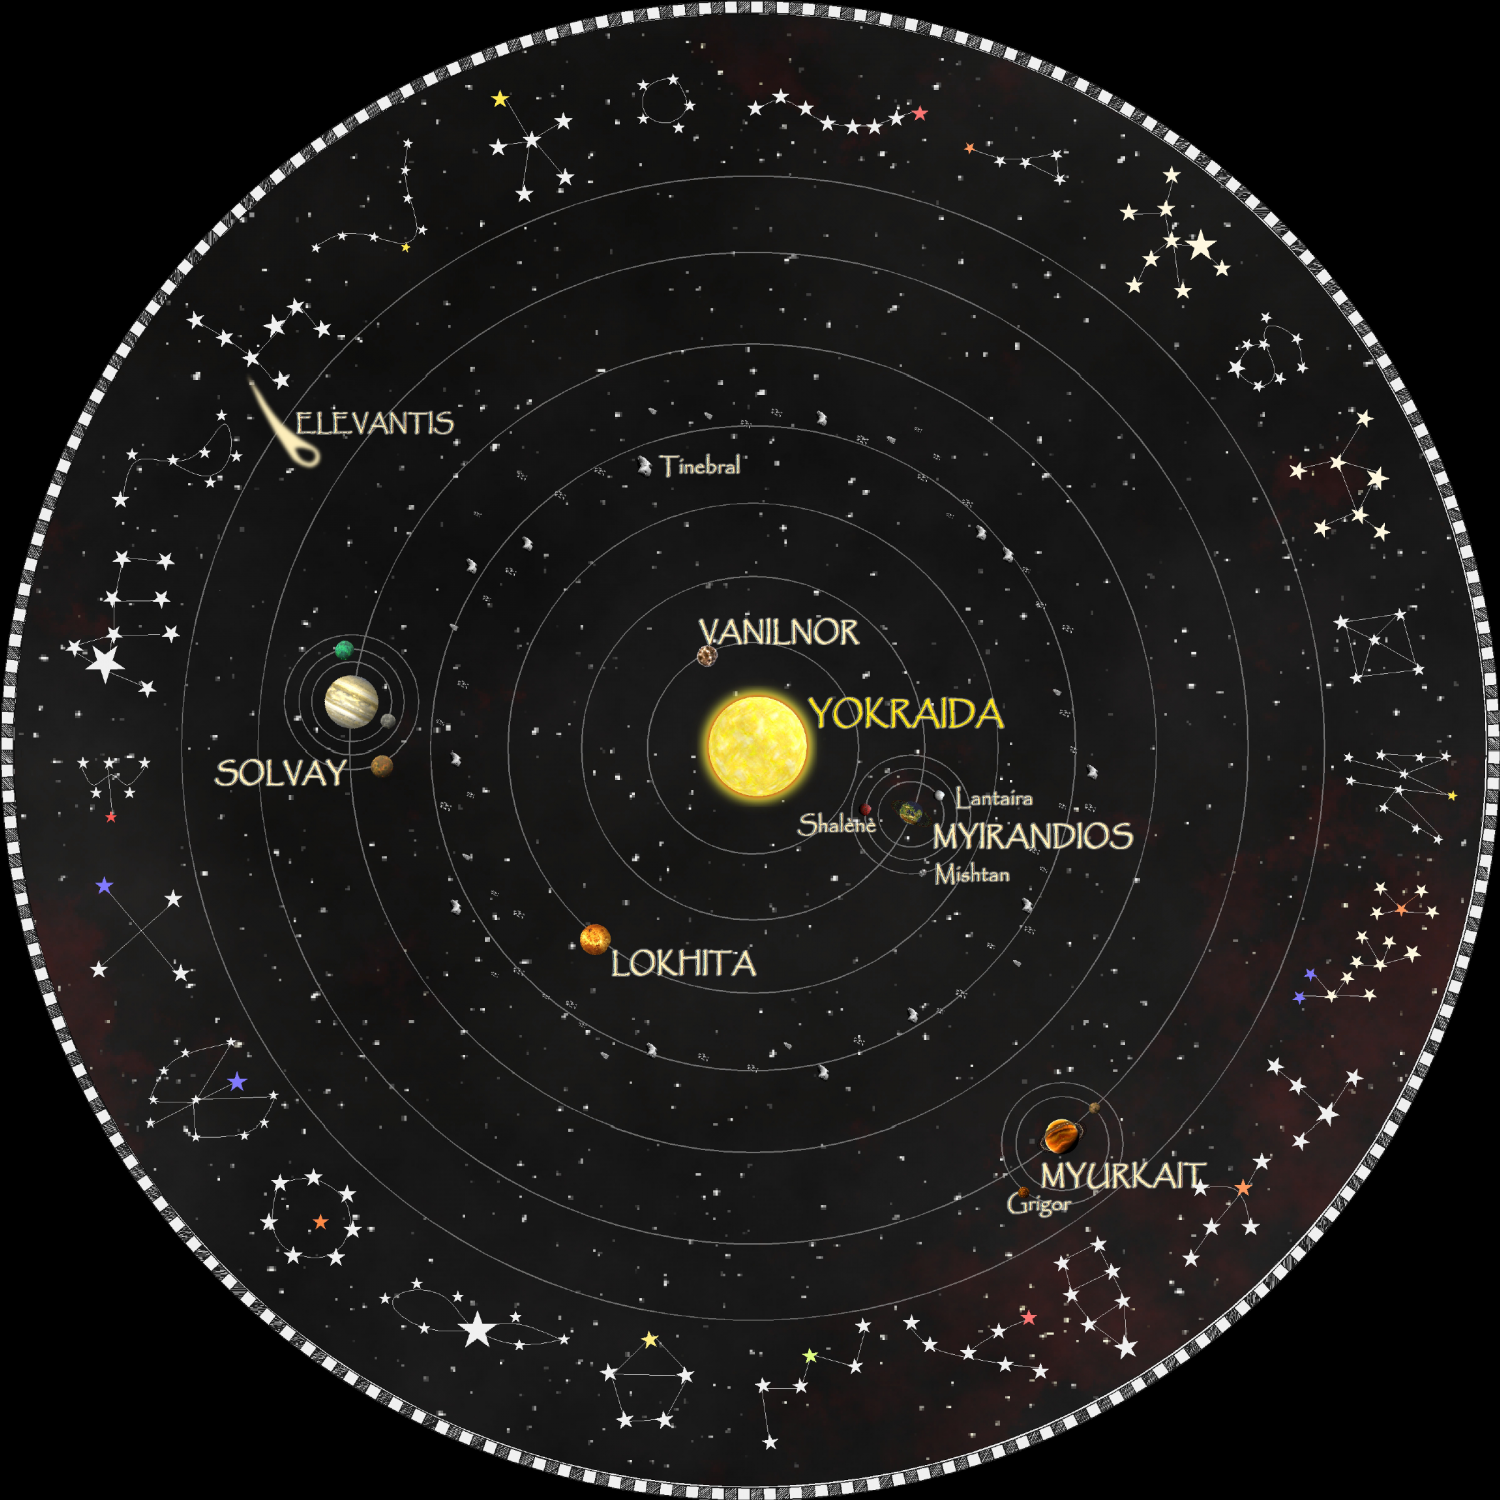 C Myirandios - Solar System round.png